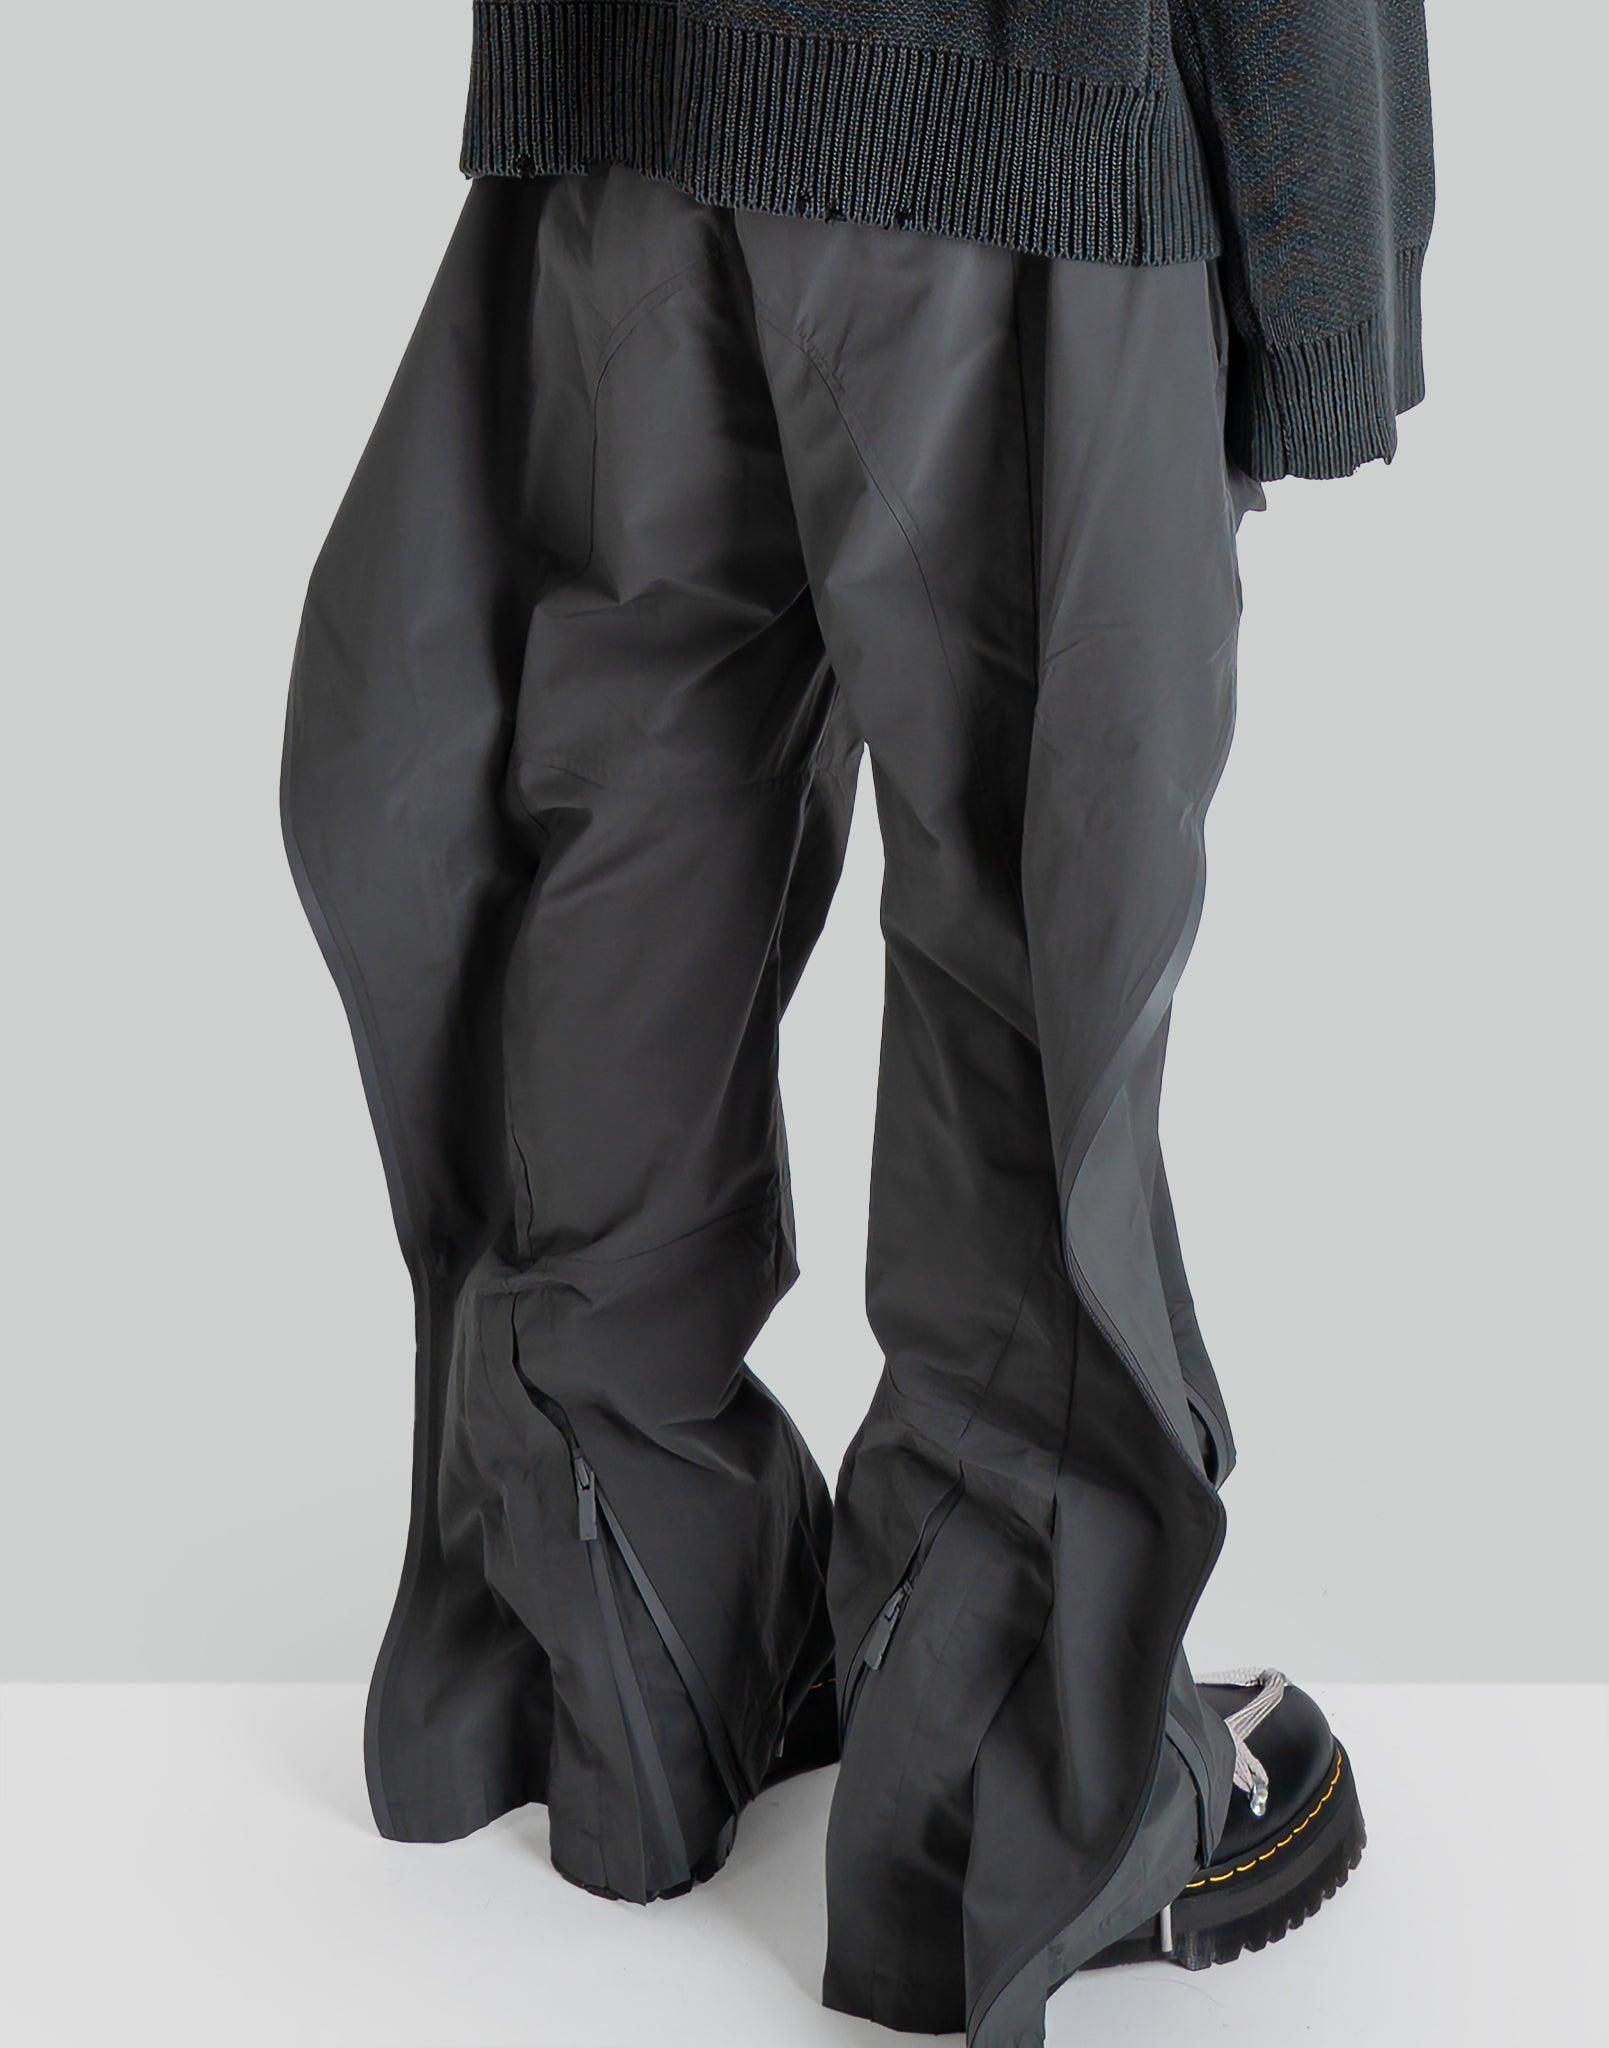 C2H4 Stereoscopic Zippered Ski Pants - 082plus